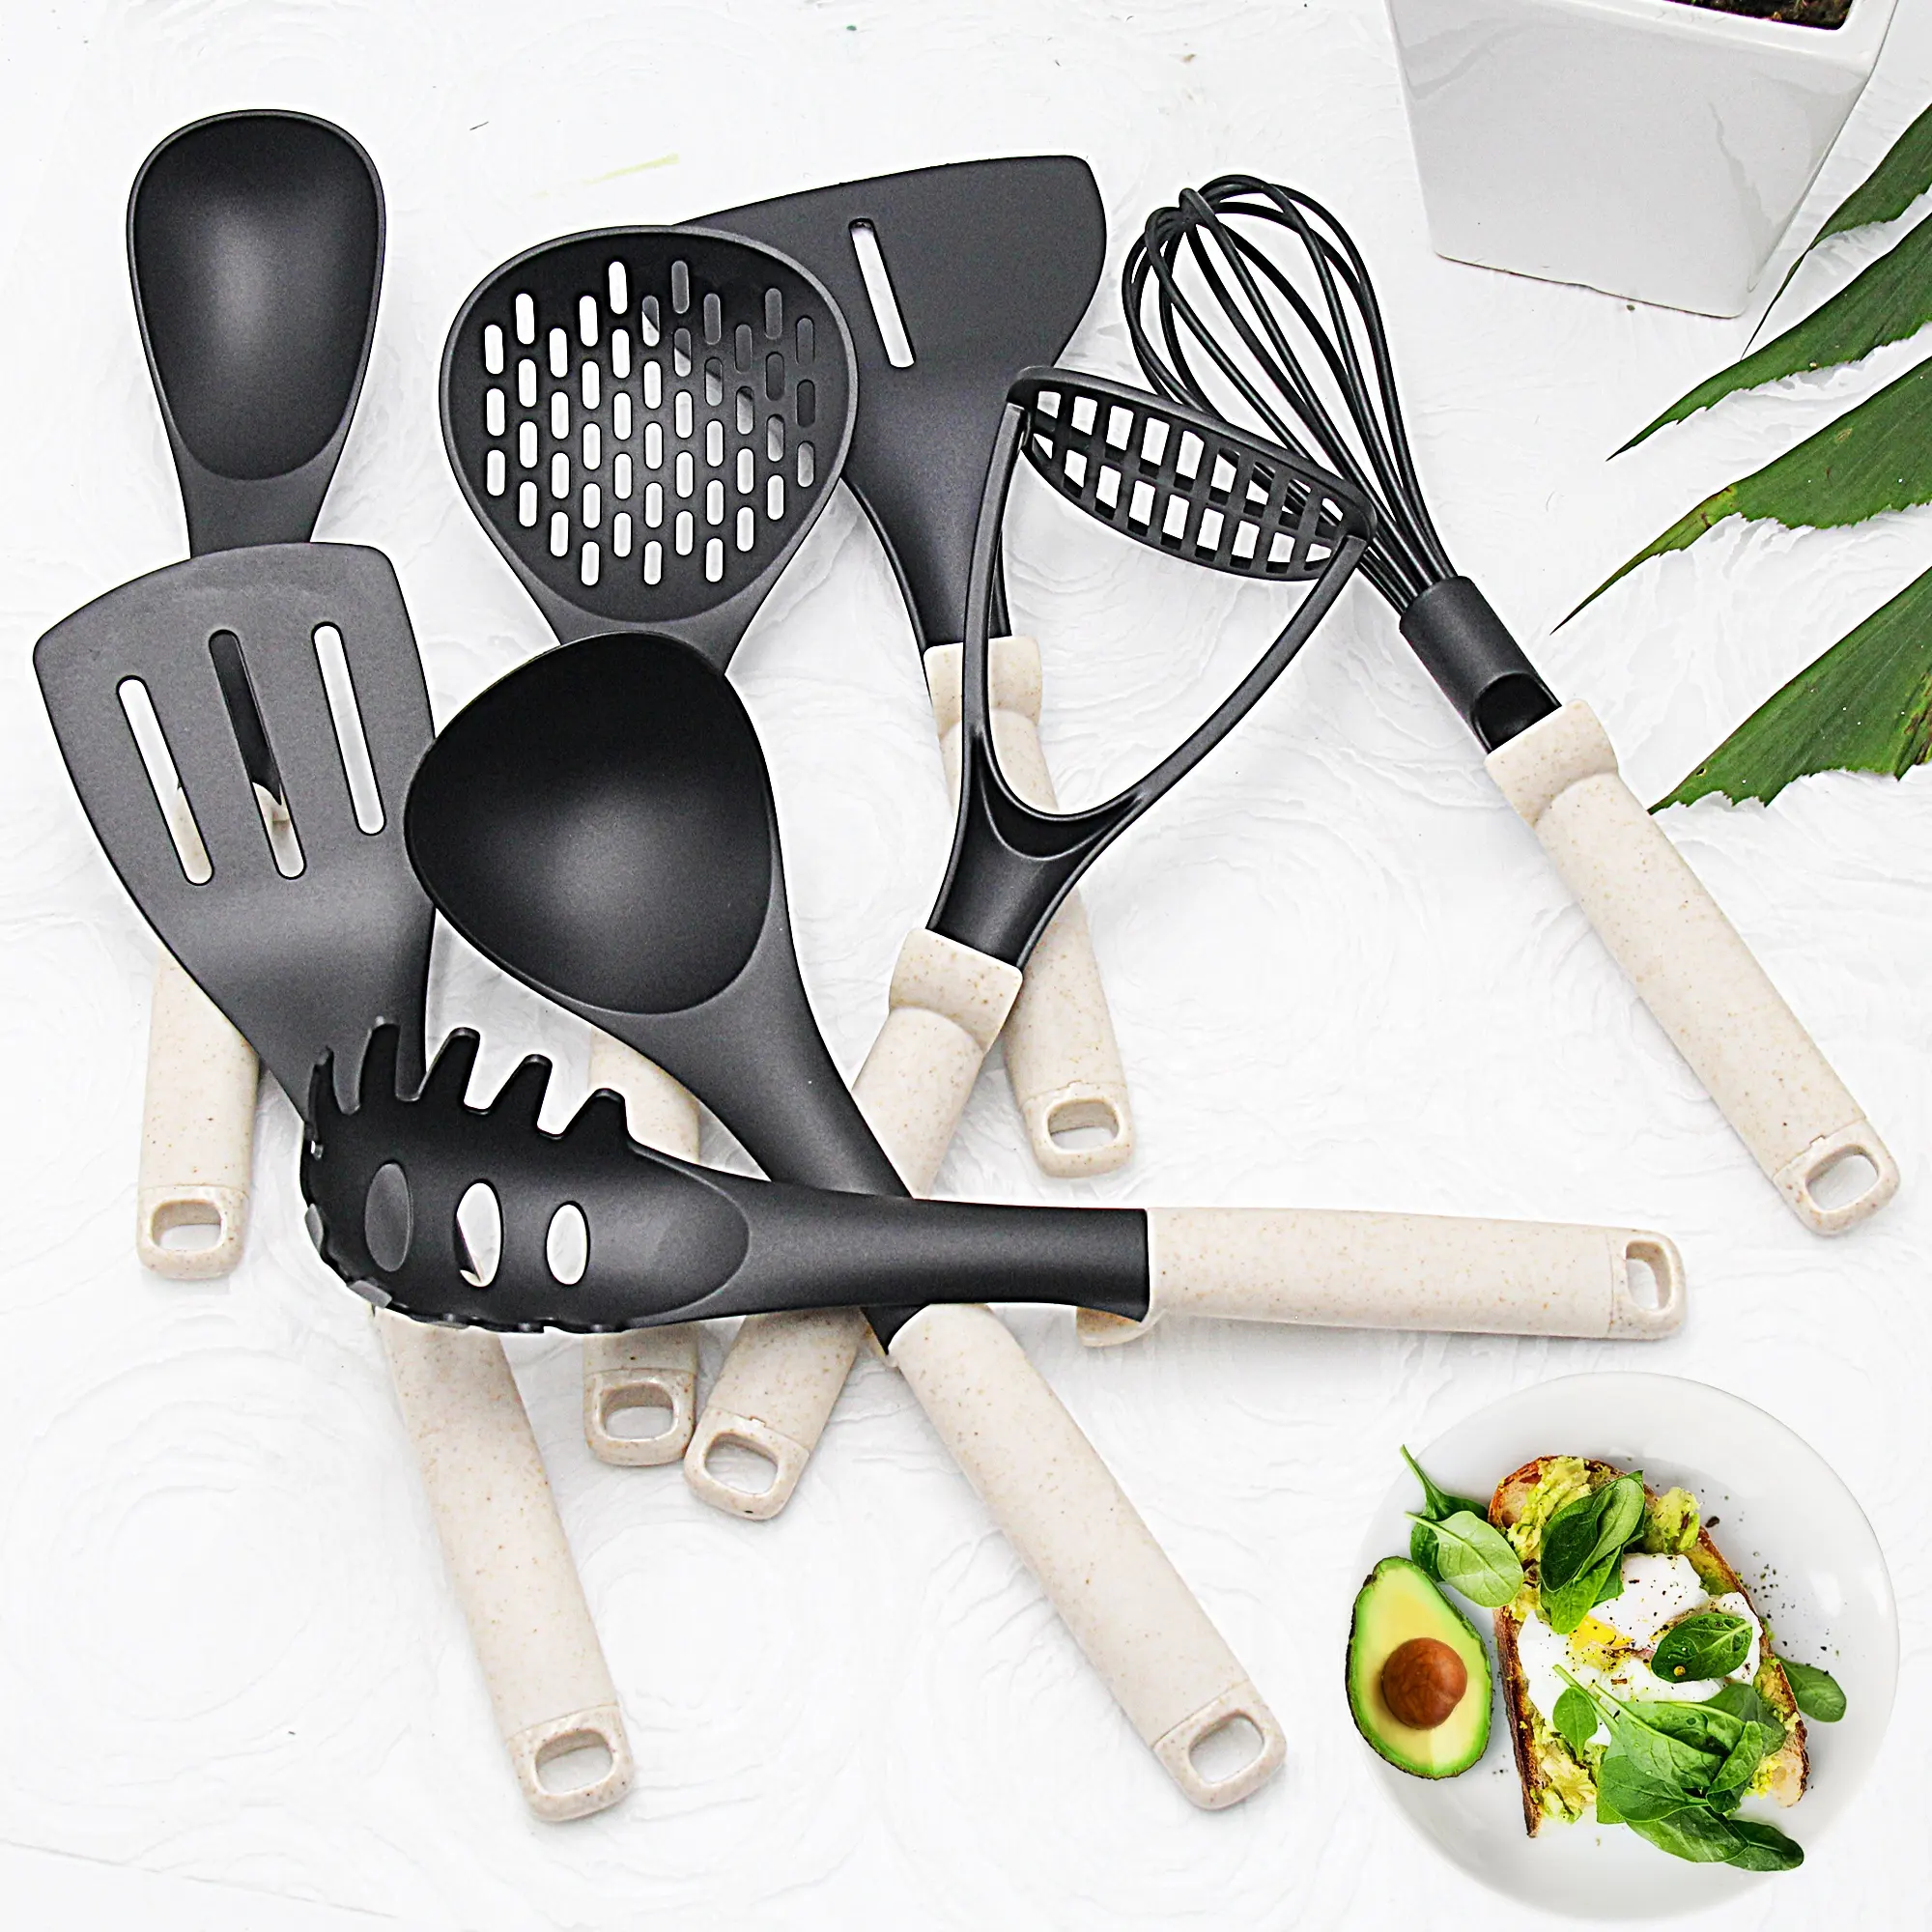 Latest food grade Nylon home kitchen supplies accessories tools set